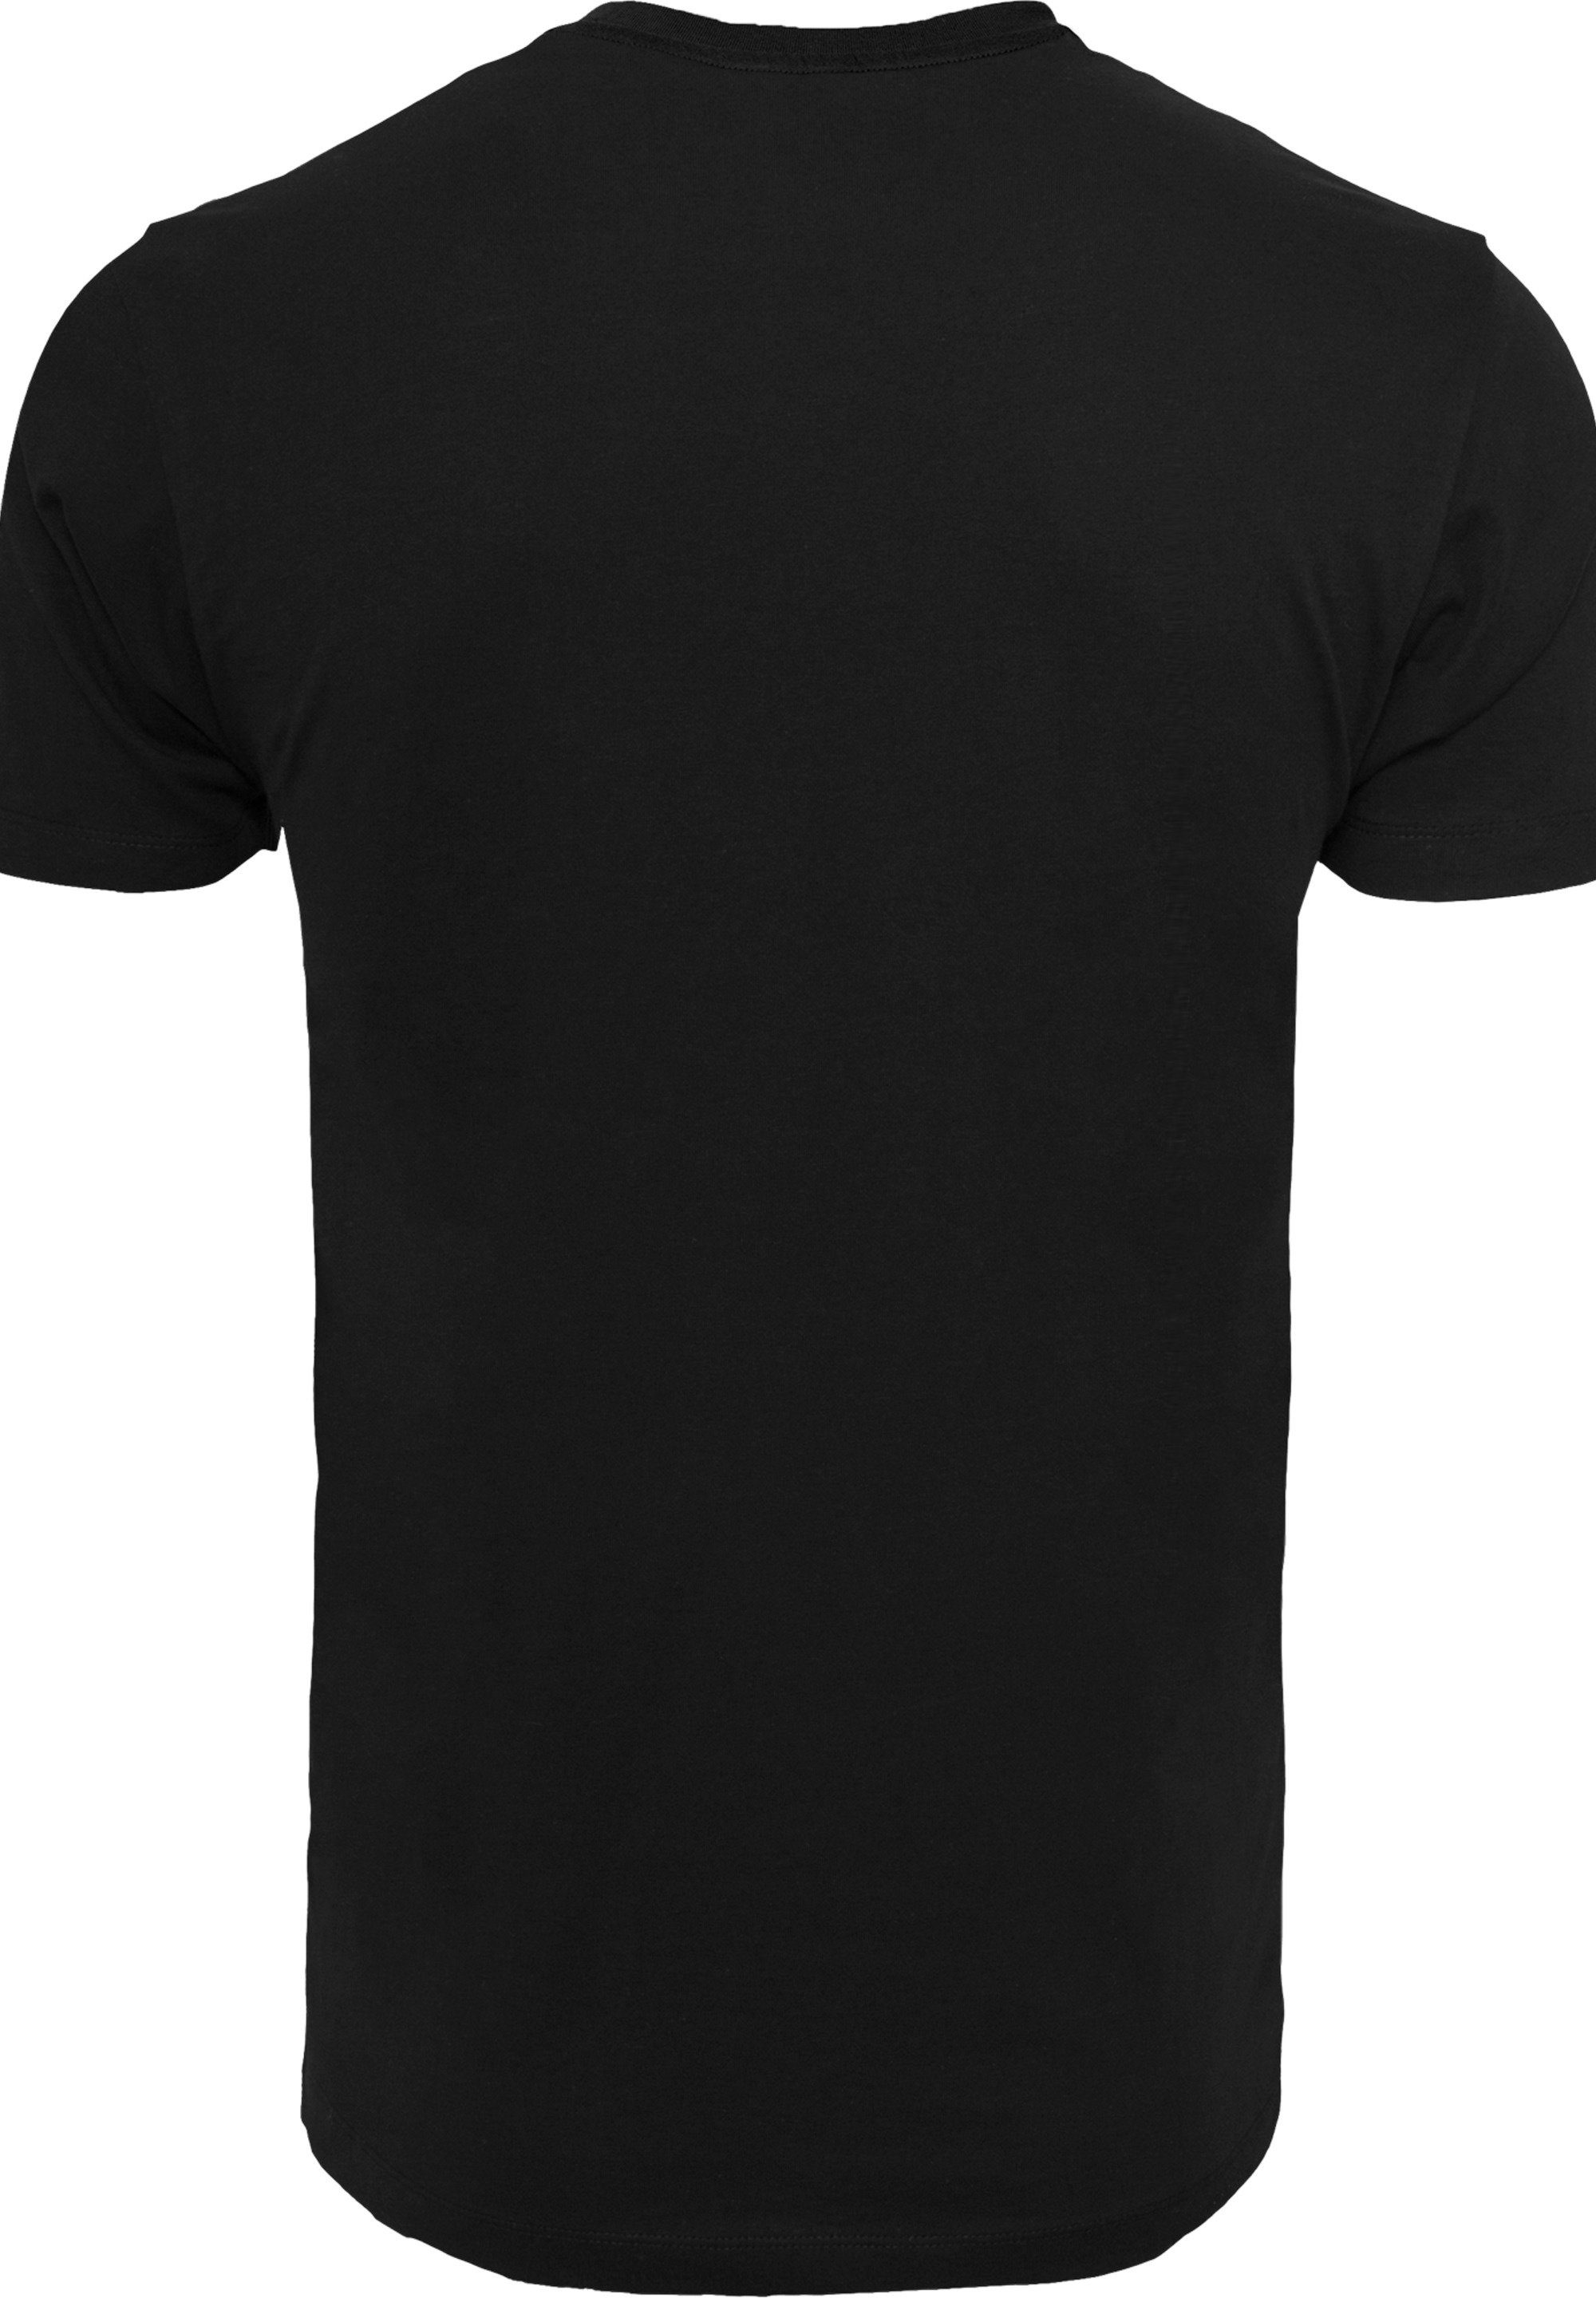 Merch,Regular-Fit,Basic,Bandshirt ACDC T-Shirt Album Covers F4NT4STIC Herren,Premium